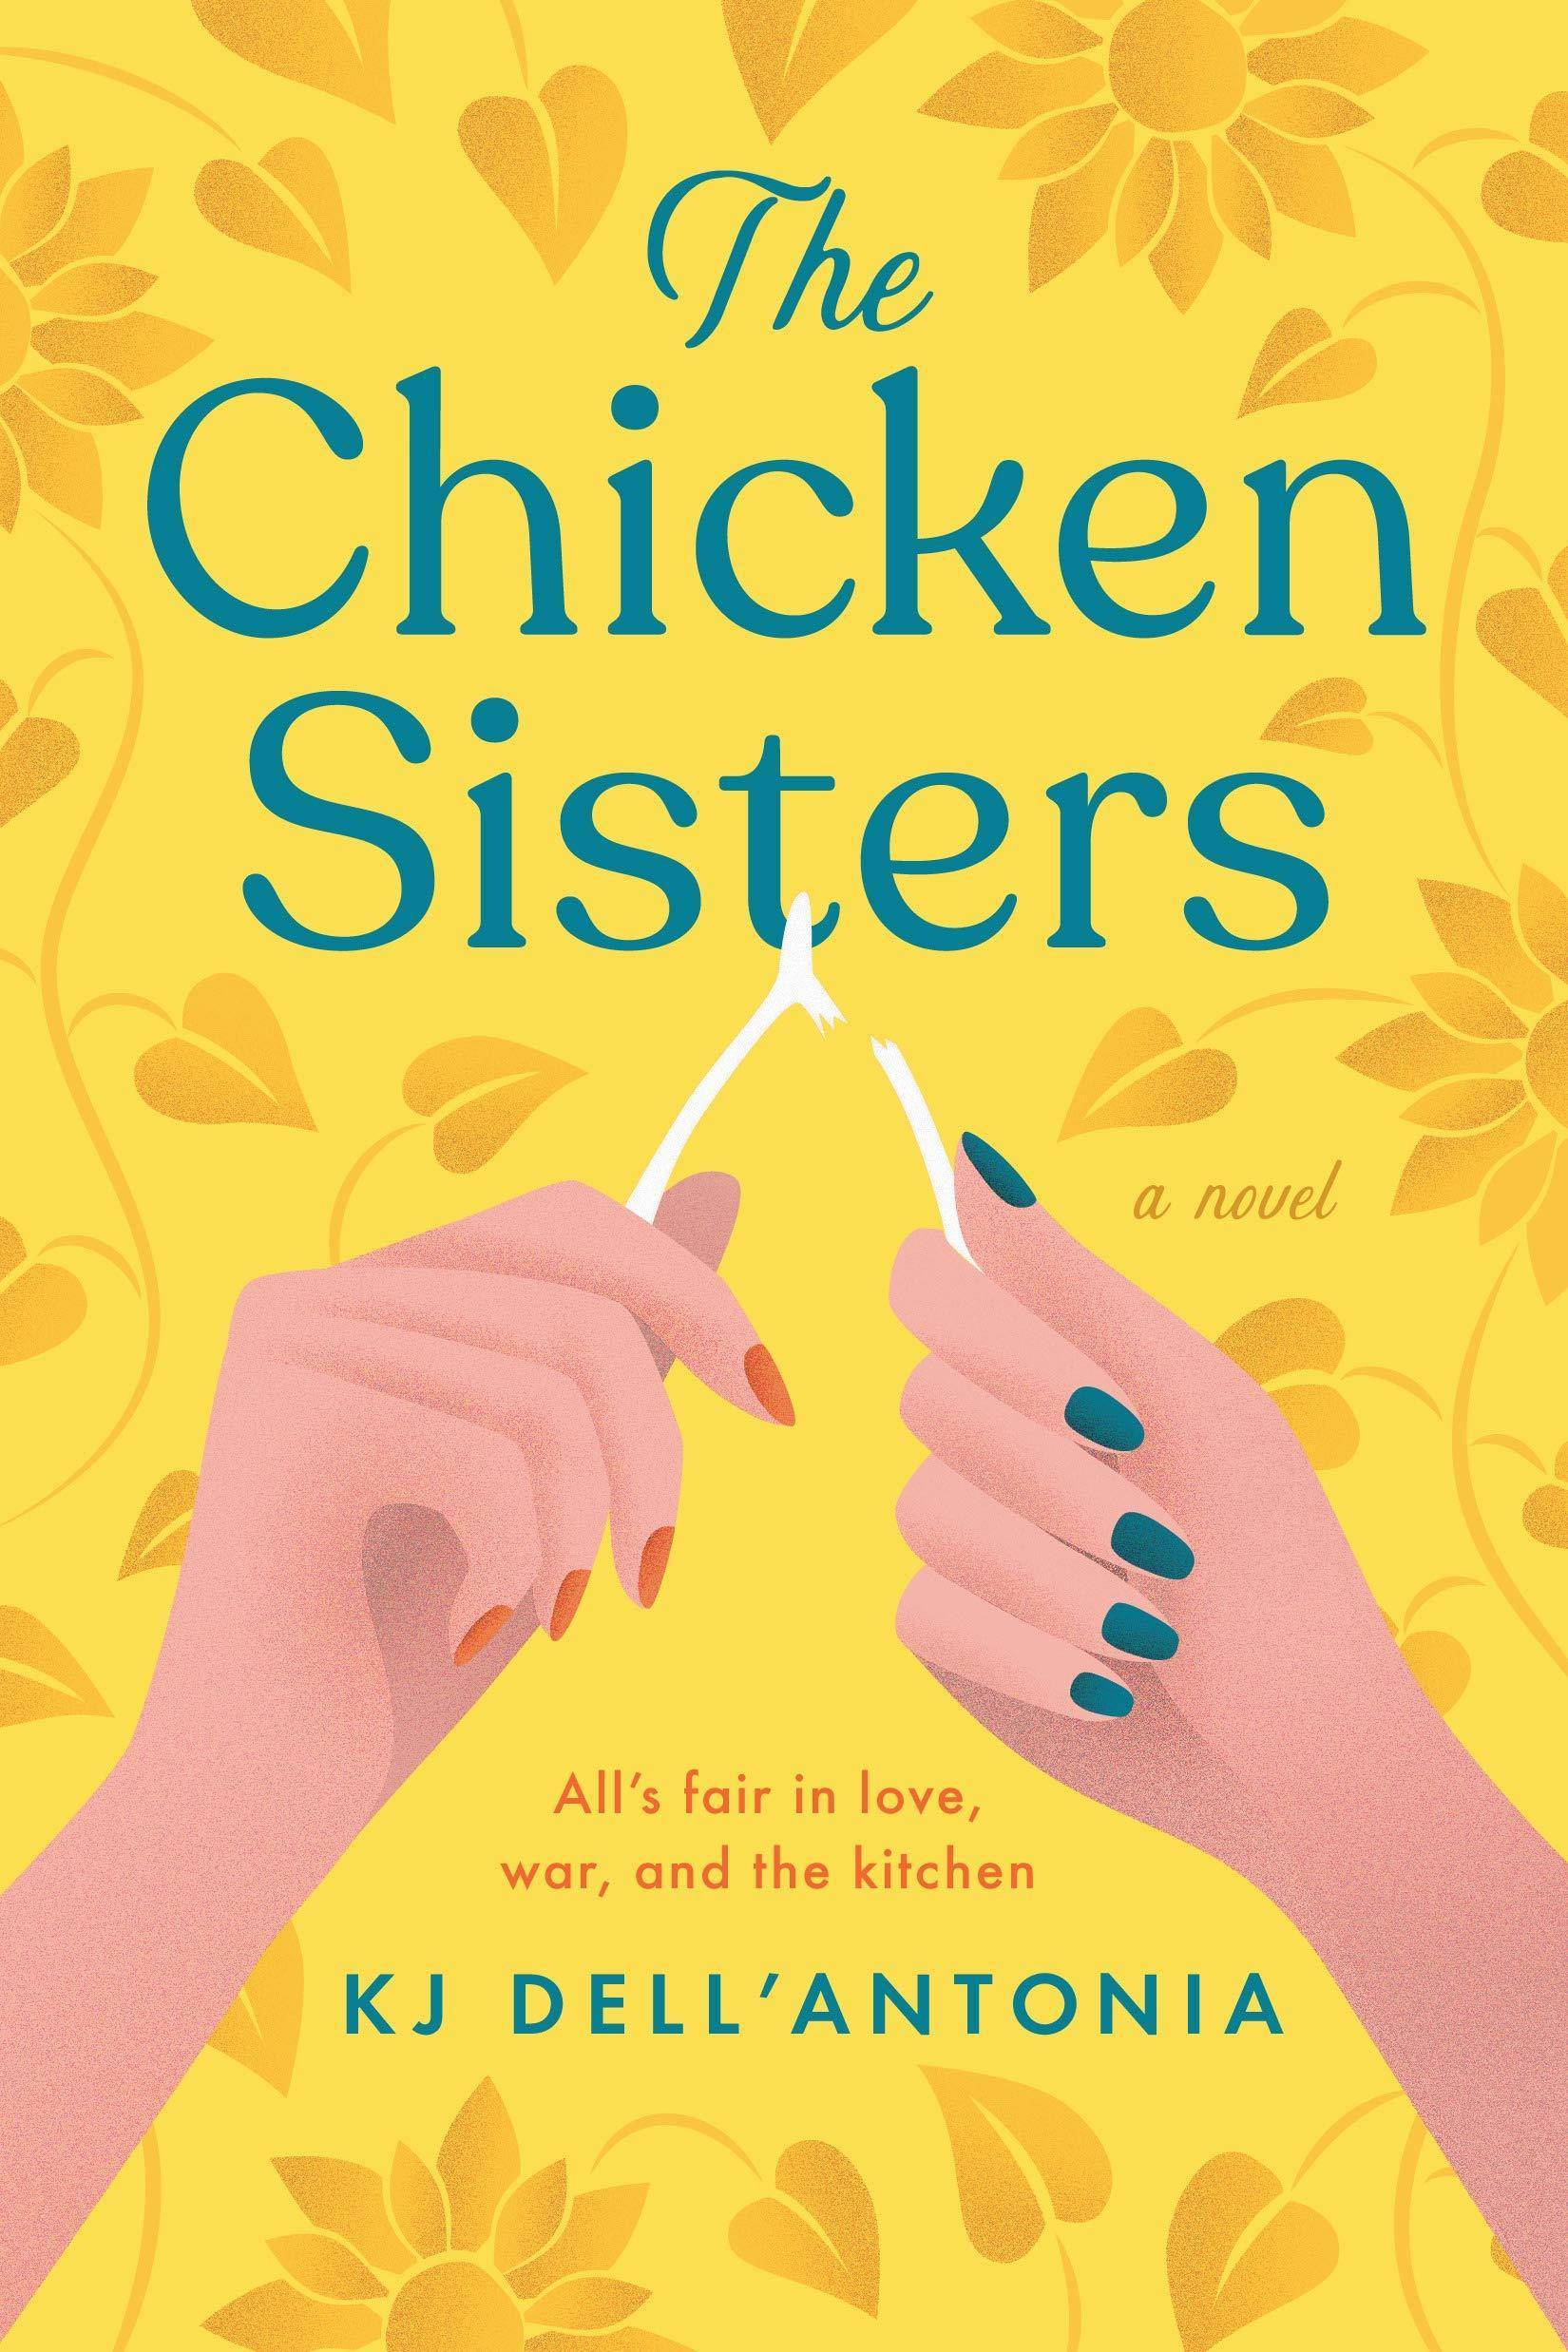 The Chicken Sisters - SureShot Books Publishing LLC